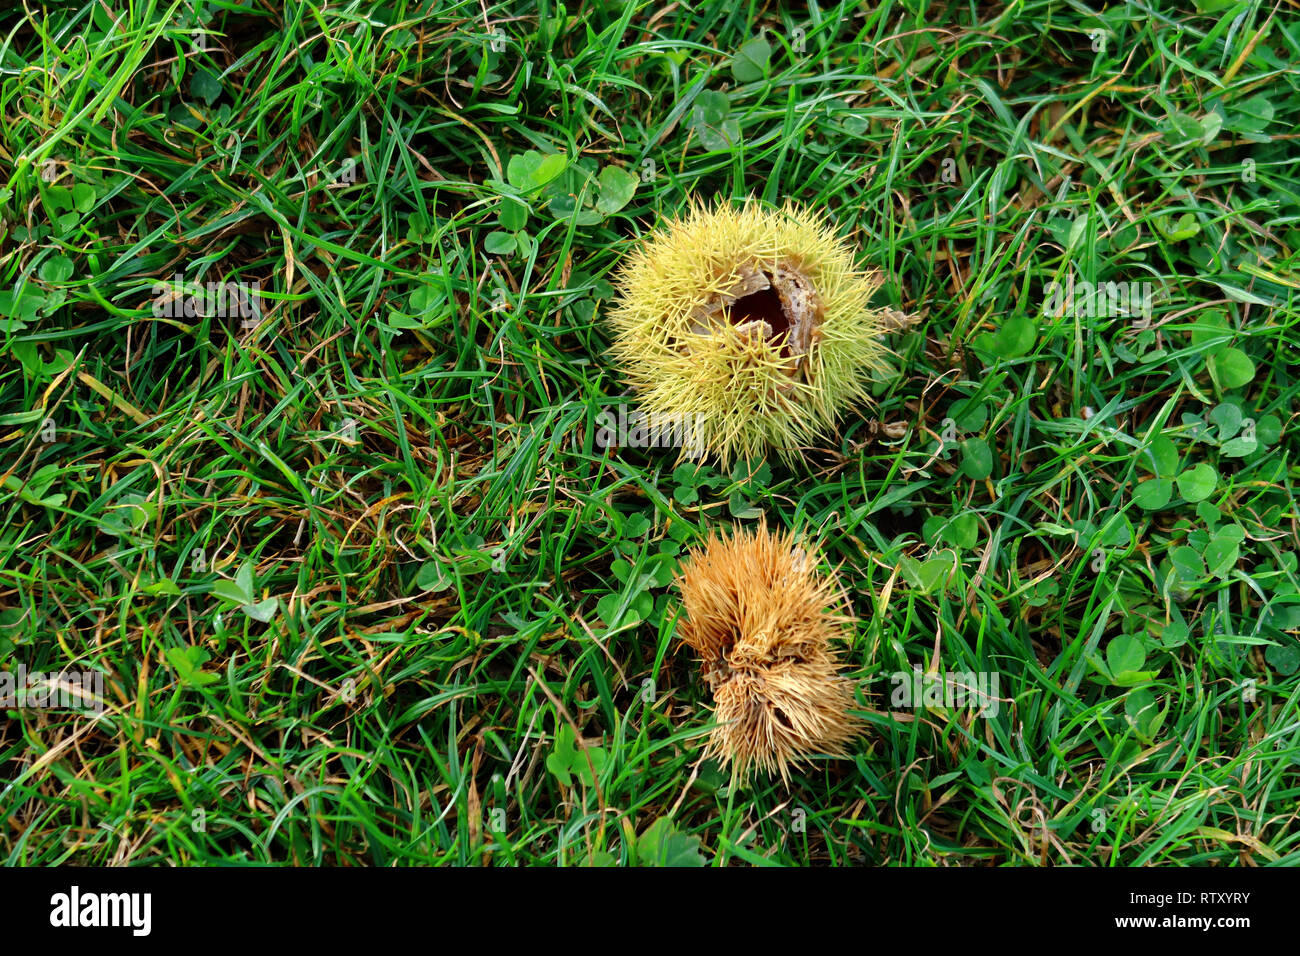 Chestnut husks in the green grass Stock Photo